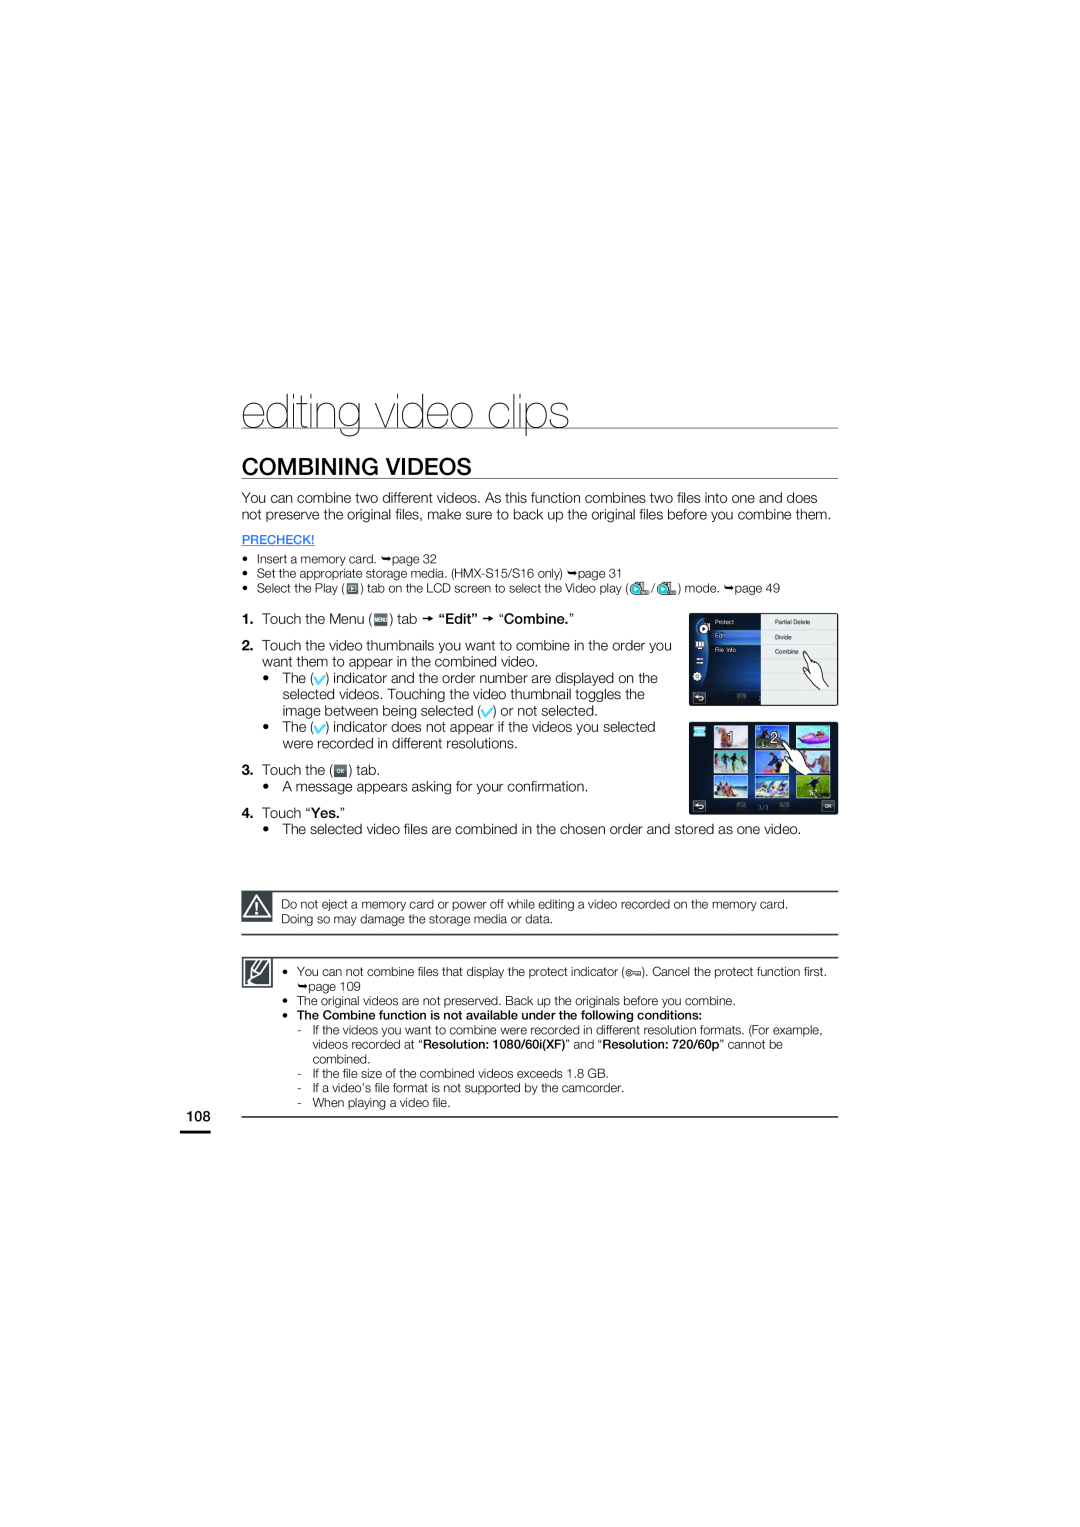 Samsung HMX-S15BN/XAA, HMX-S10BN/XAA manual Combining Videos, editing video clips, 1SPUFDU 